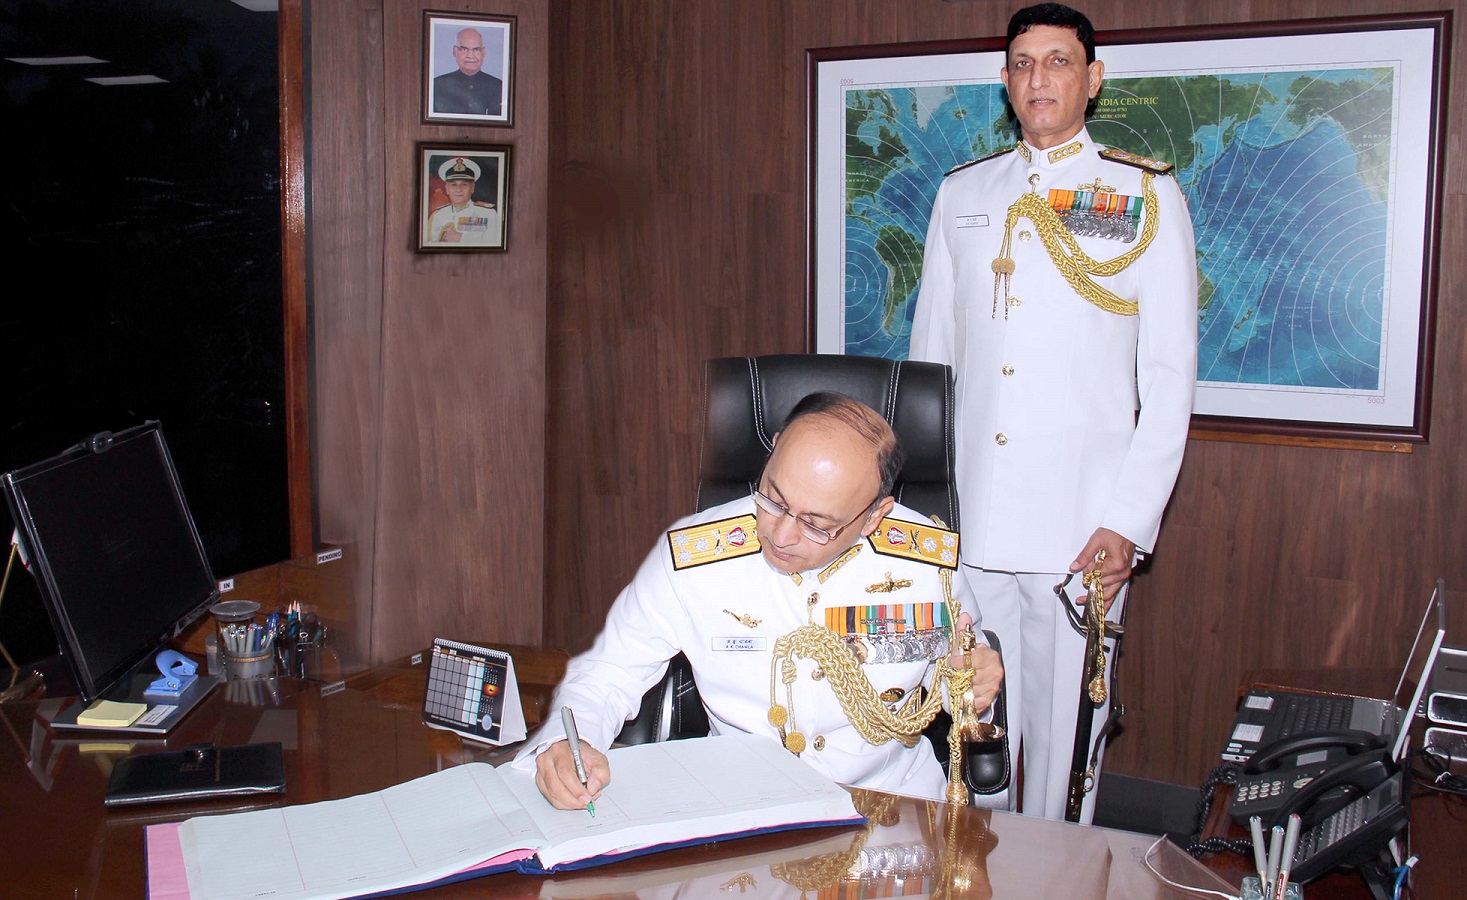 Vice Admiral Anil Kumar Chawla